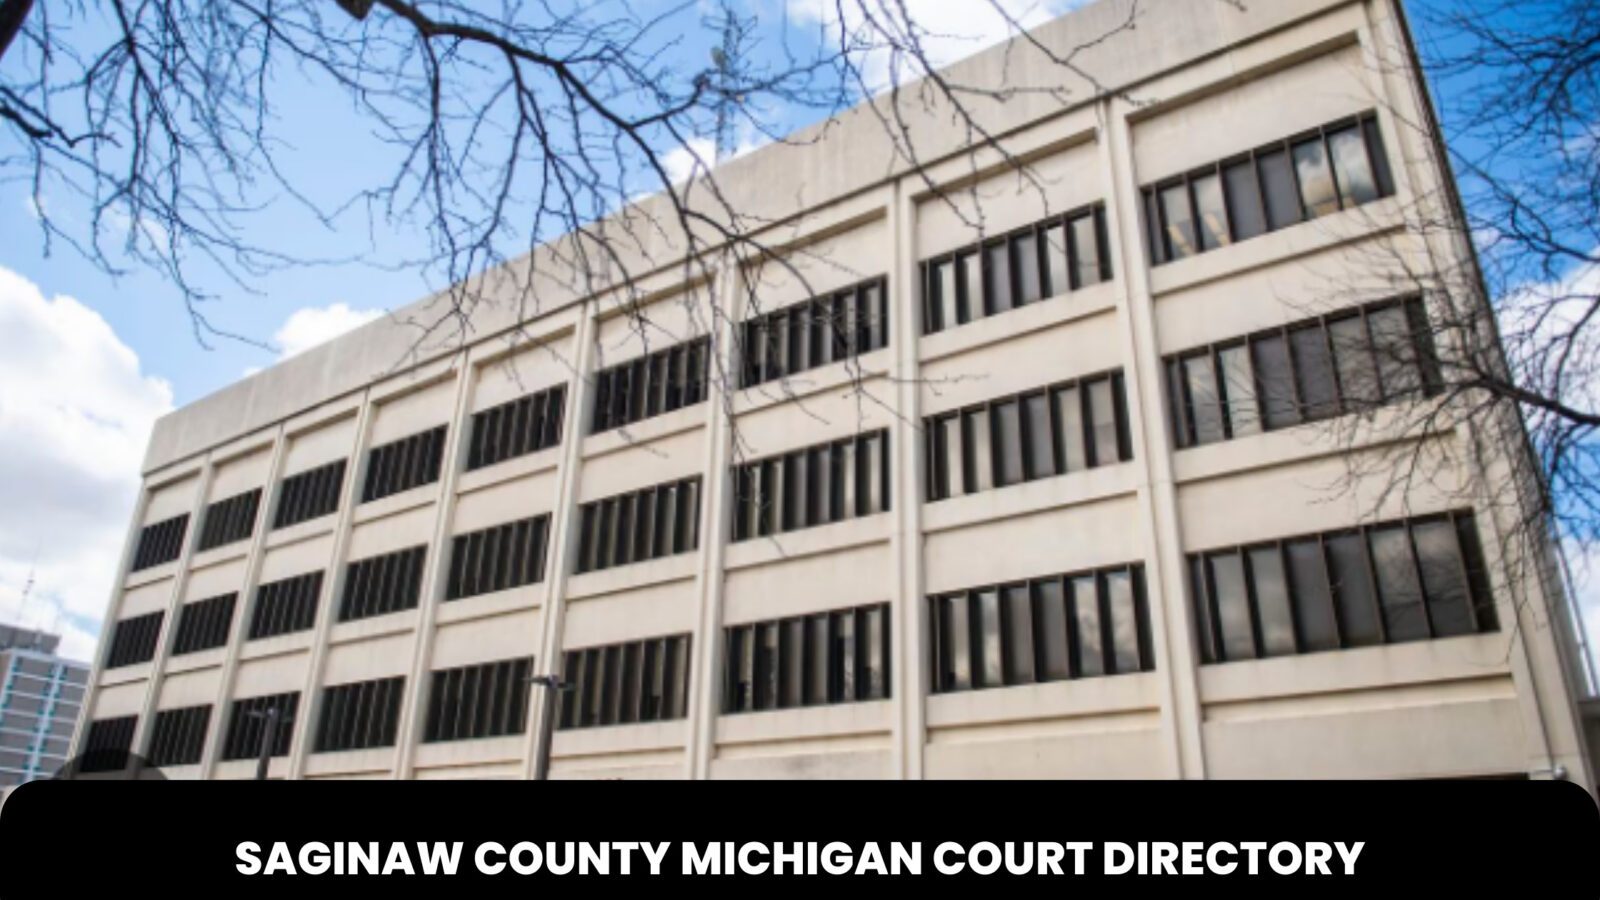 Saginaw County Michigan Court Directory 1